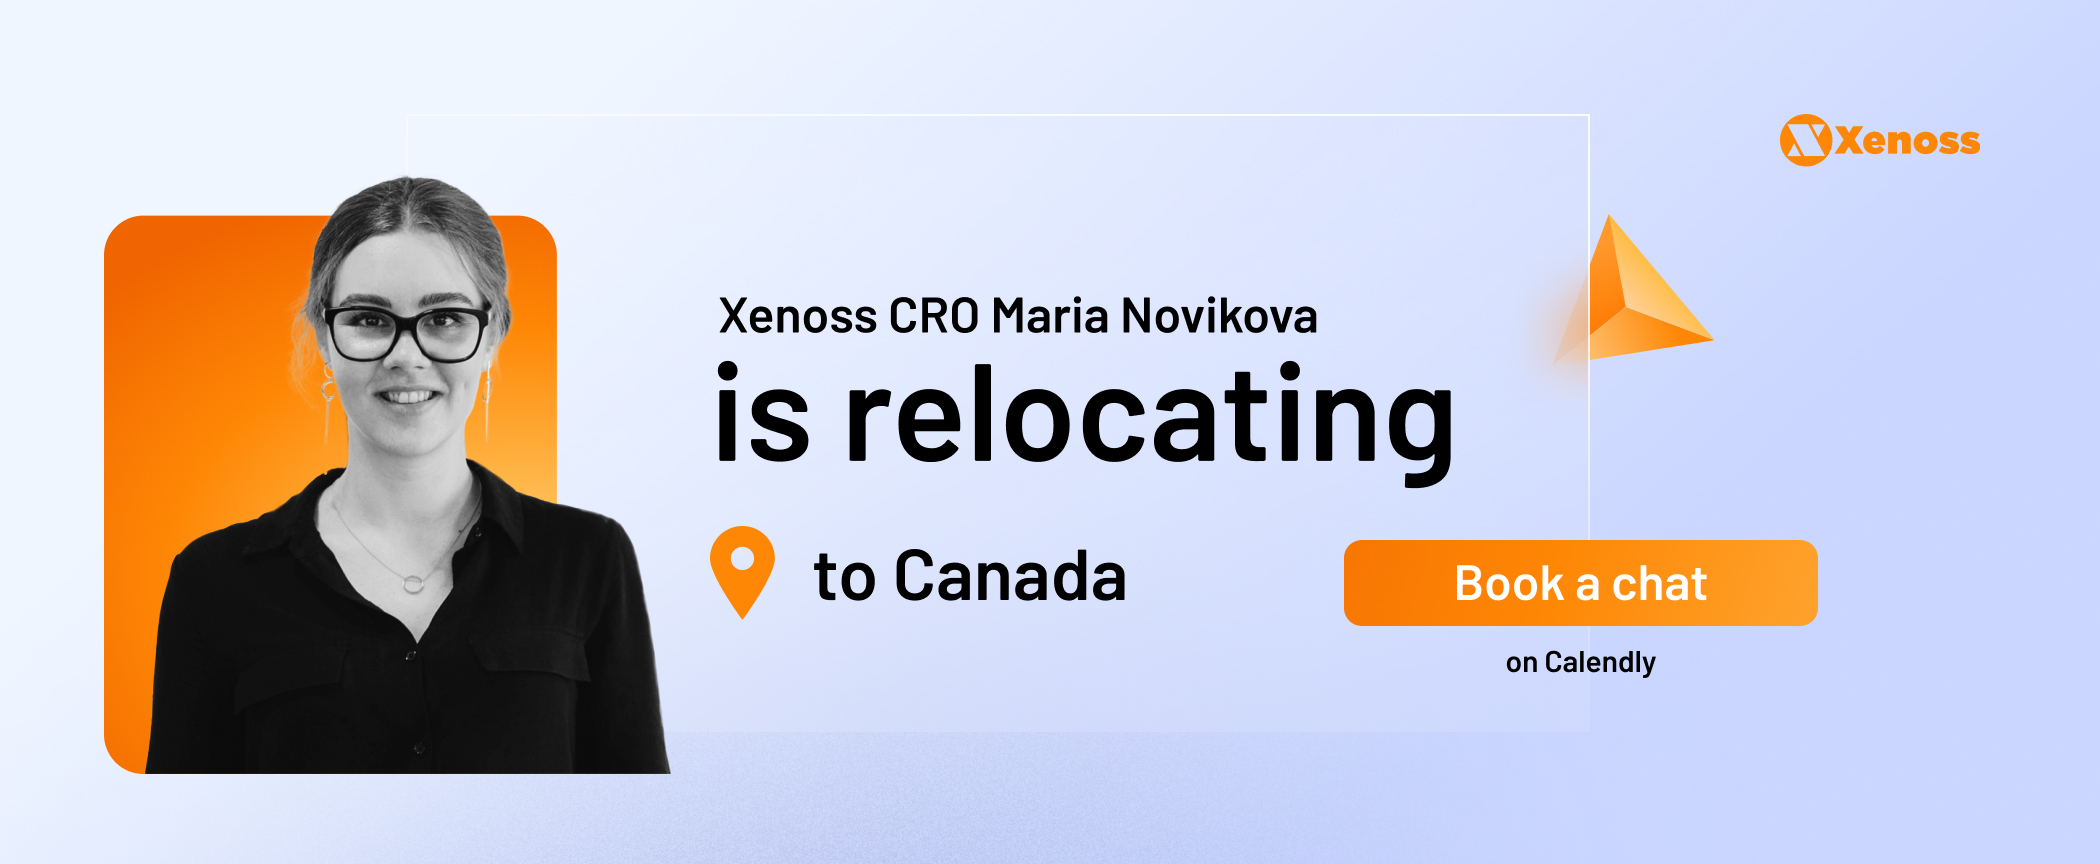 Image of Xenoss CRO Maria Novikova in Toronto, Canada